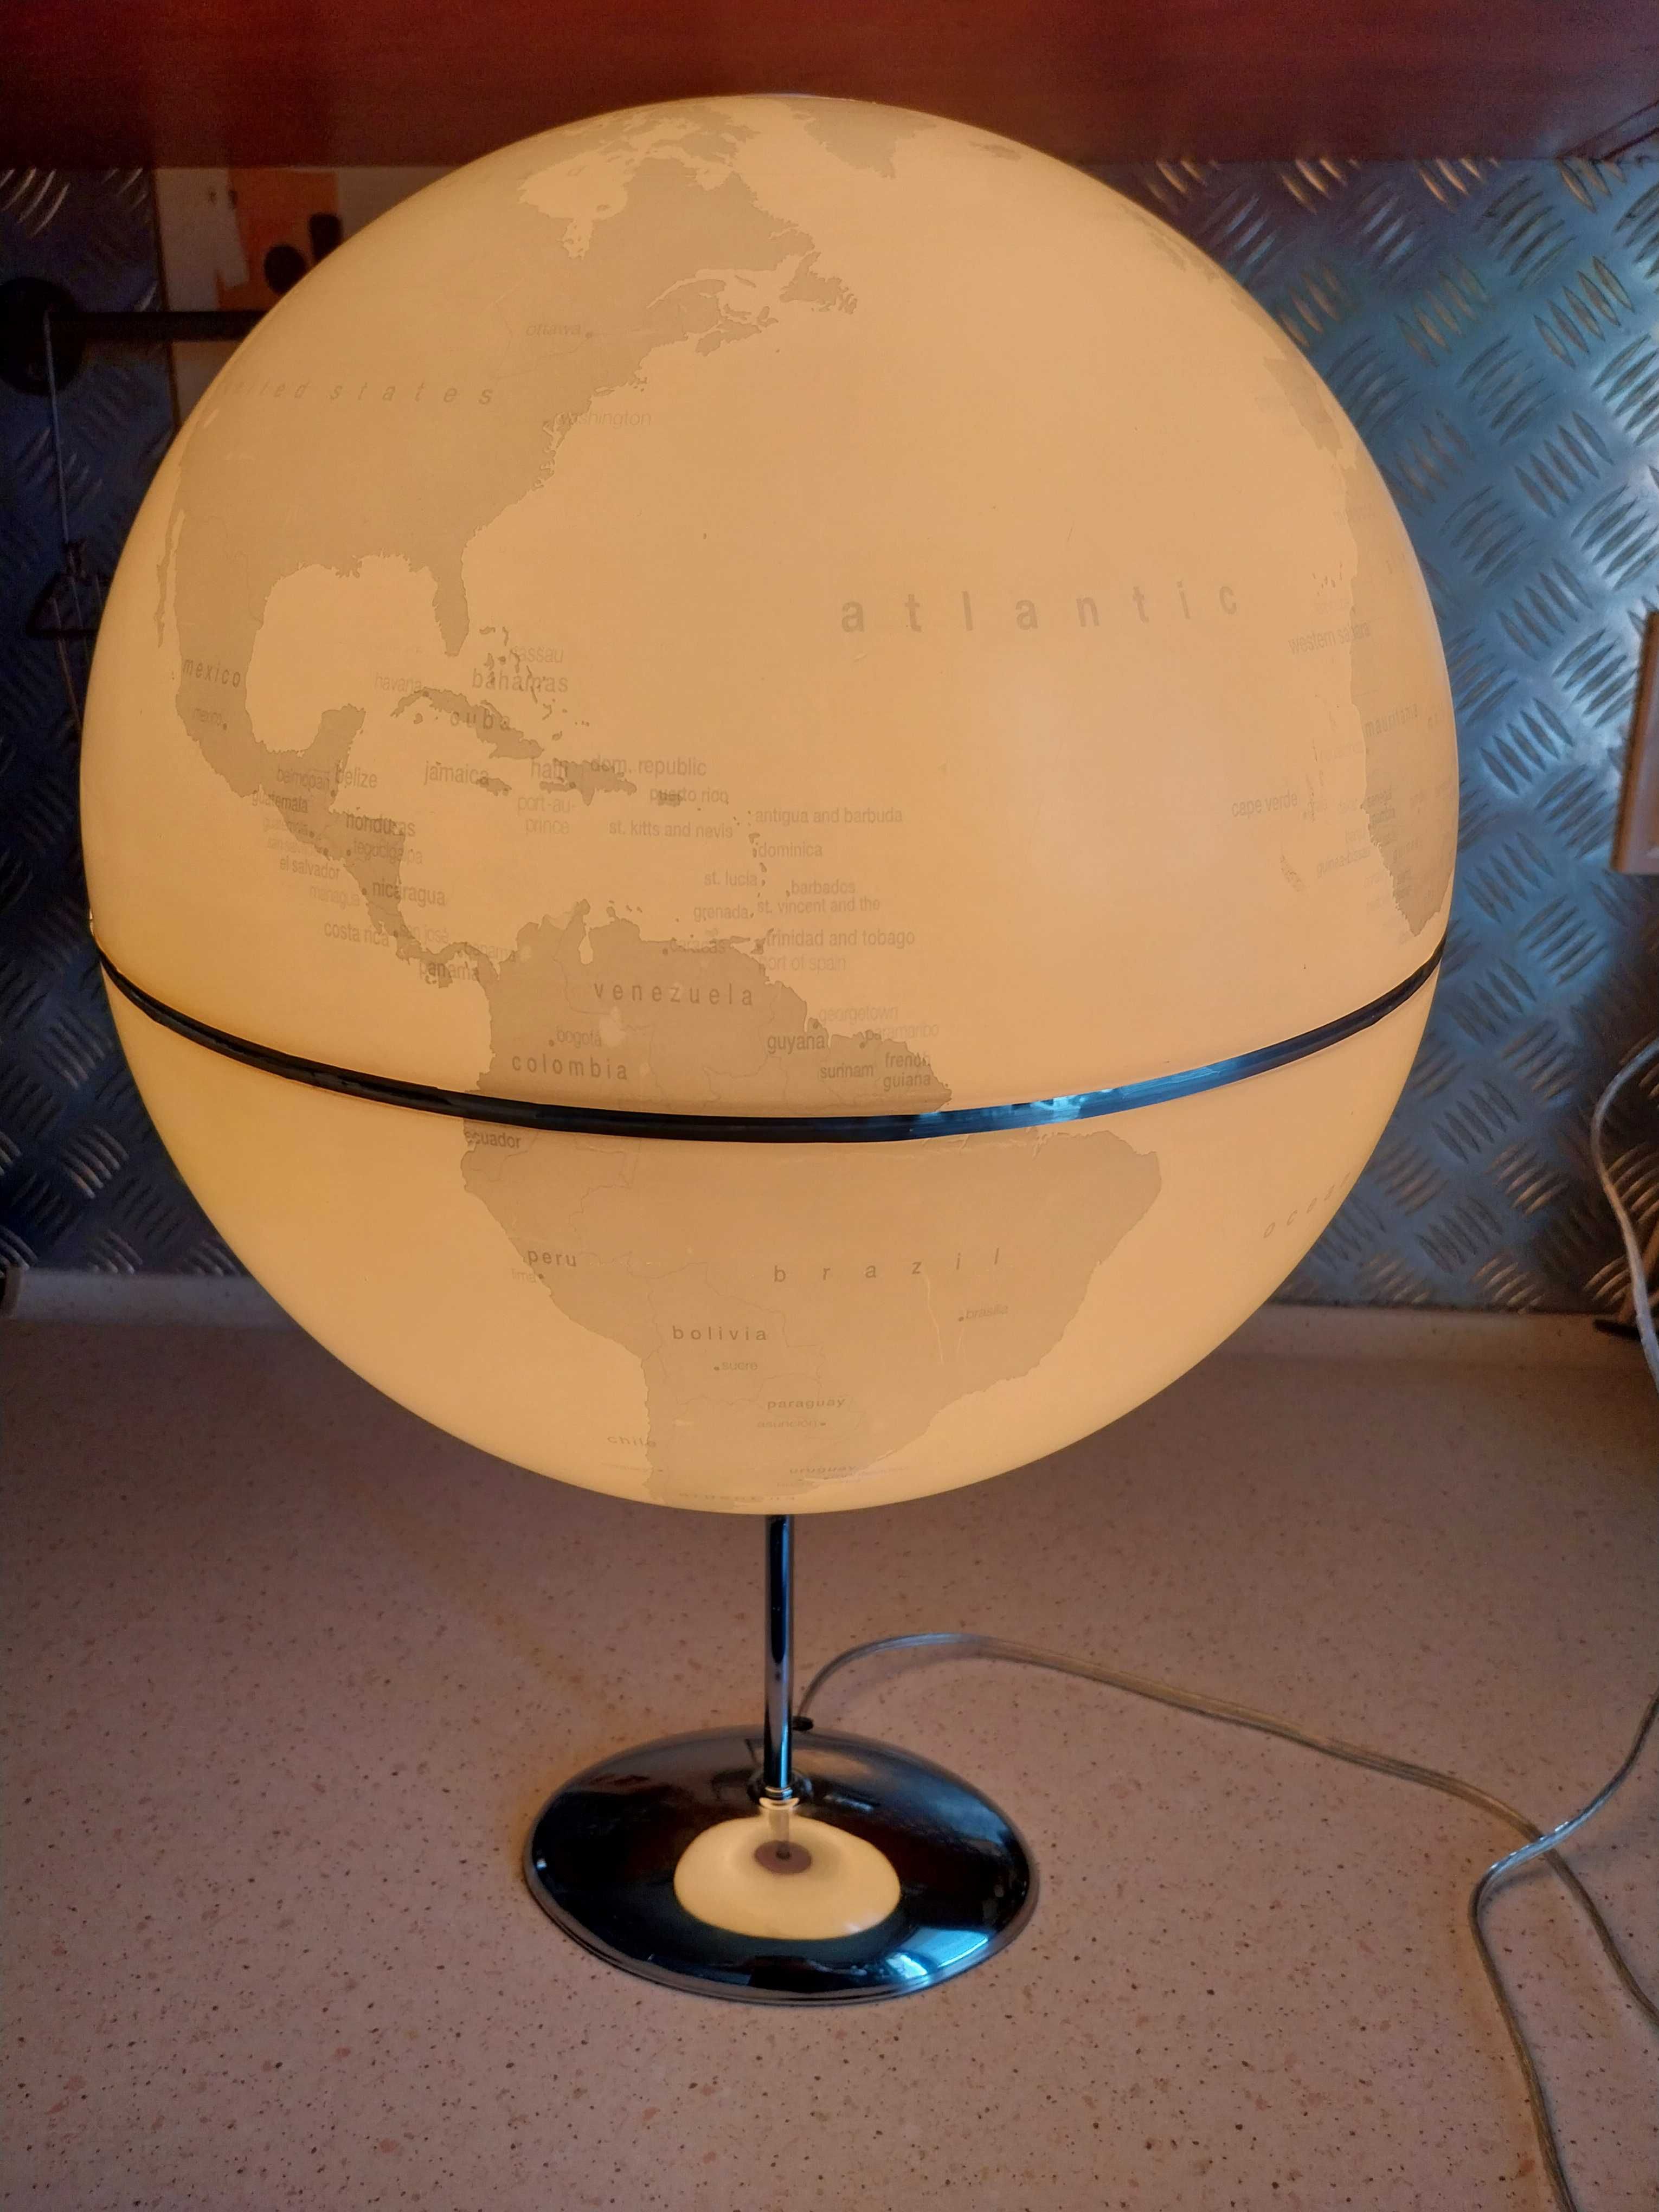 Lampa table columbus 70s devign globe regulacja jasności